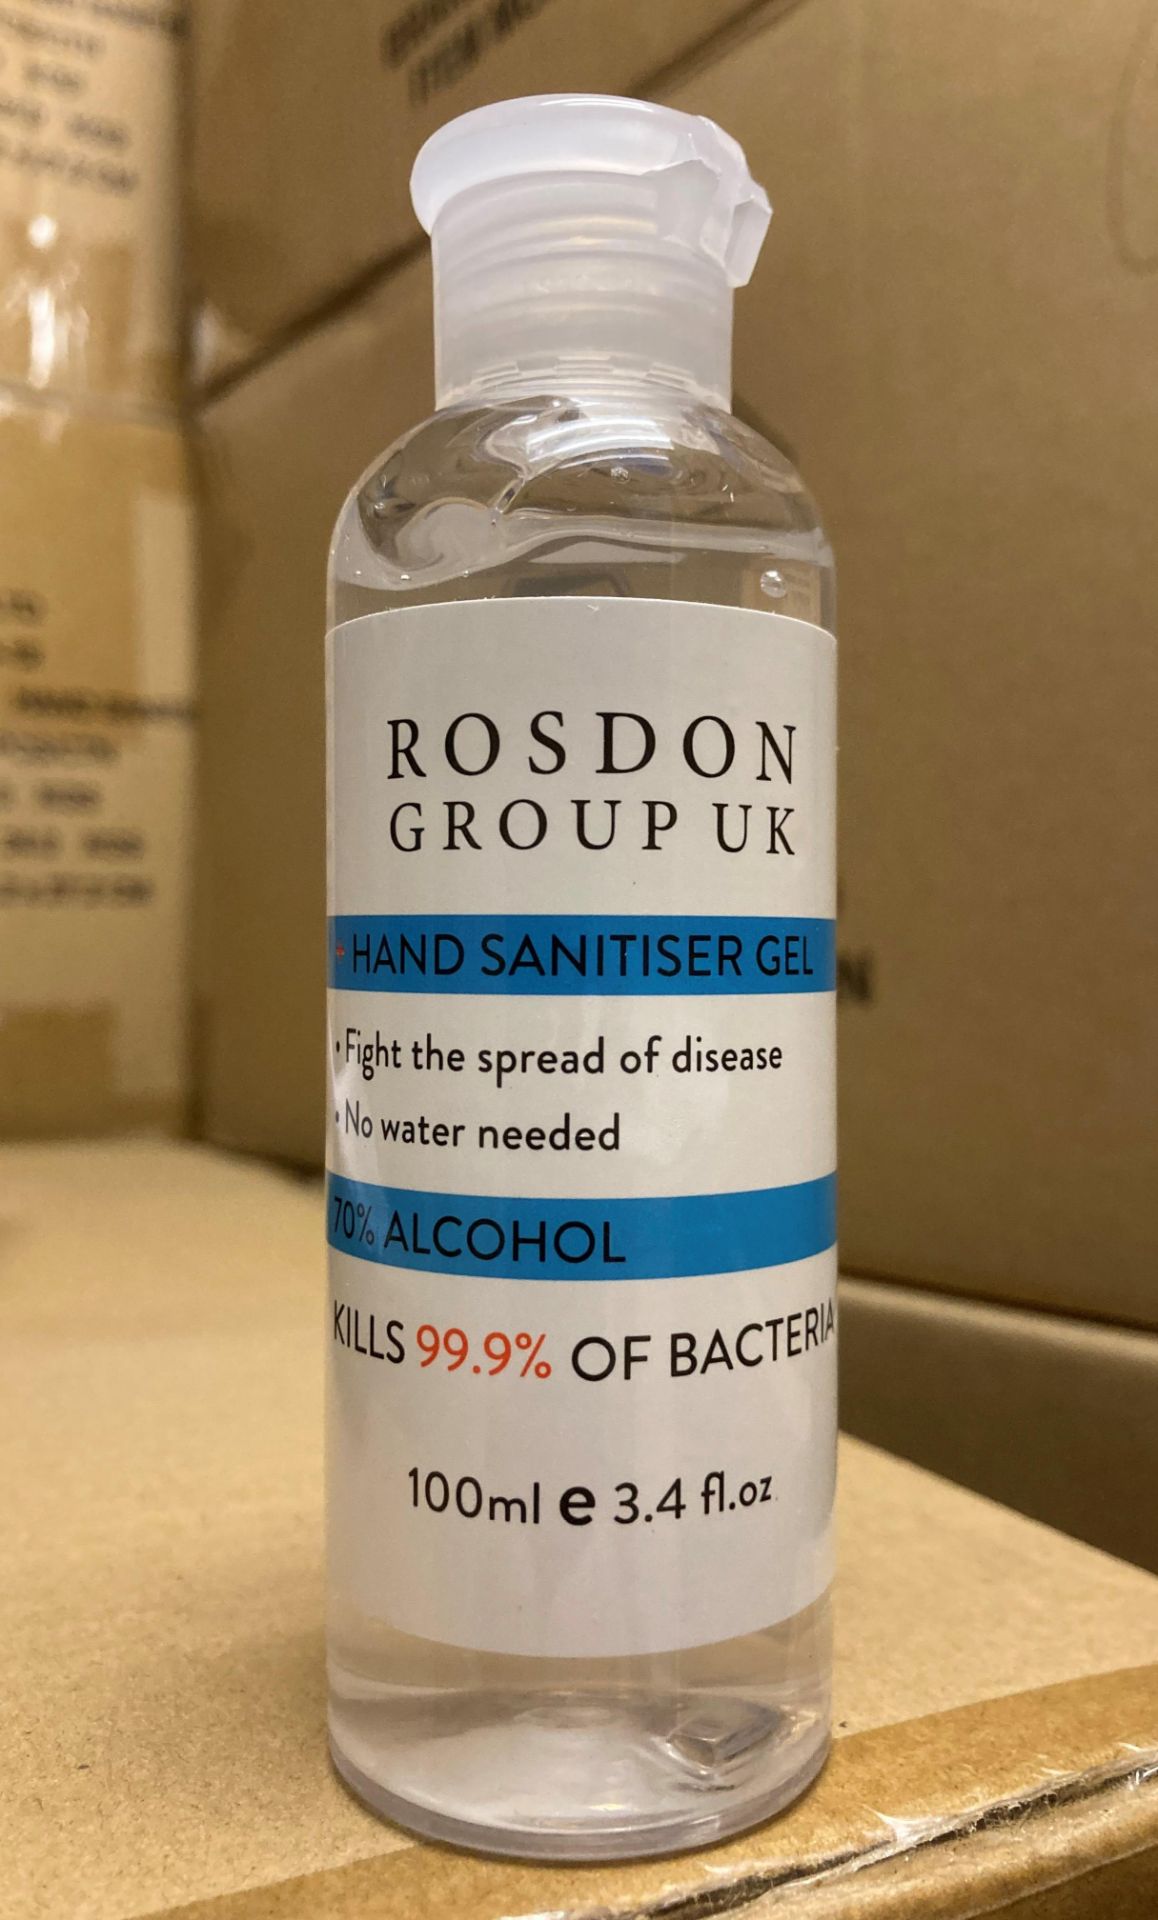 1 x box of Rosdon Group Ltd hand sanitiser gel 100ml (192 units per box)